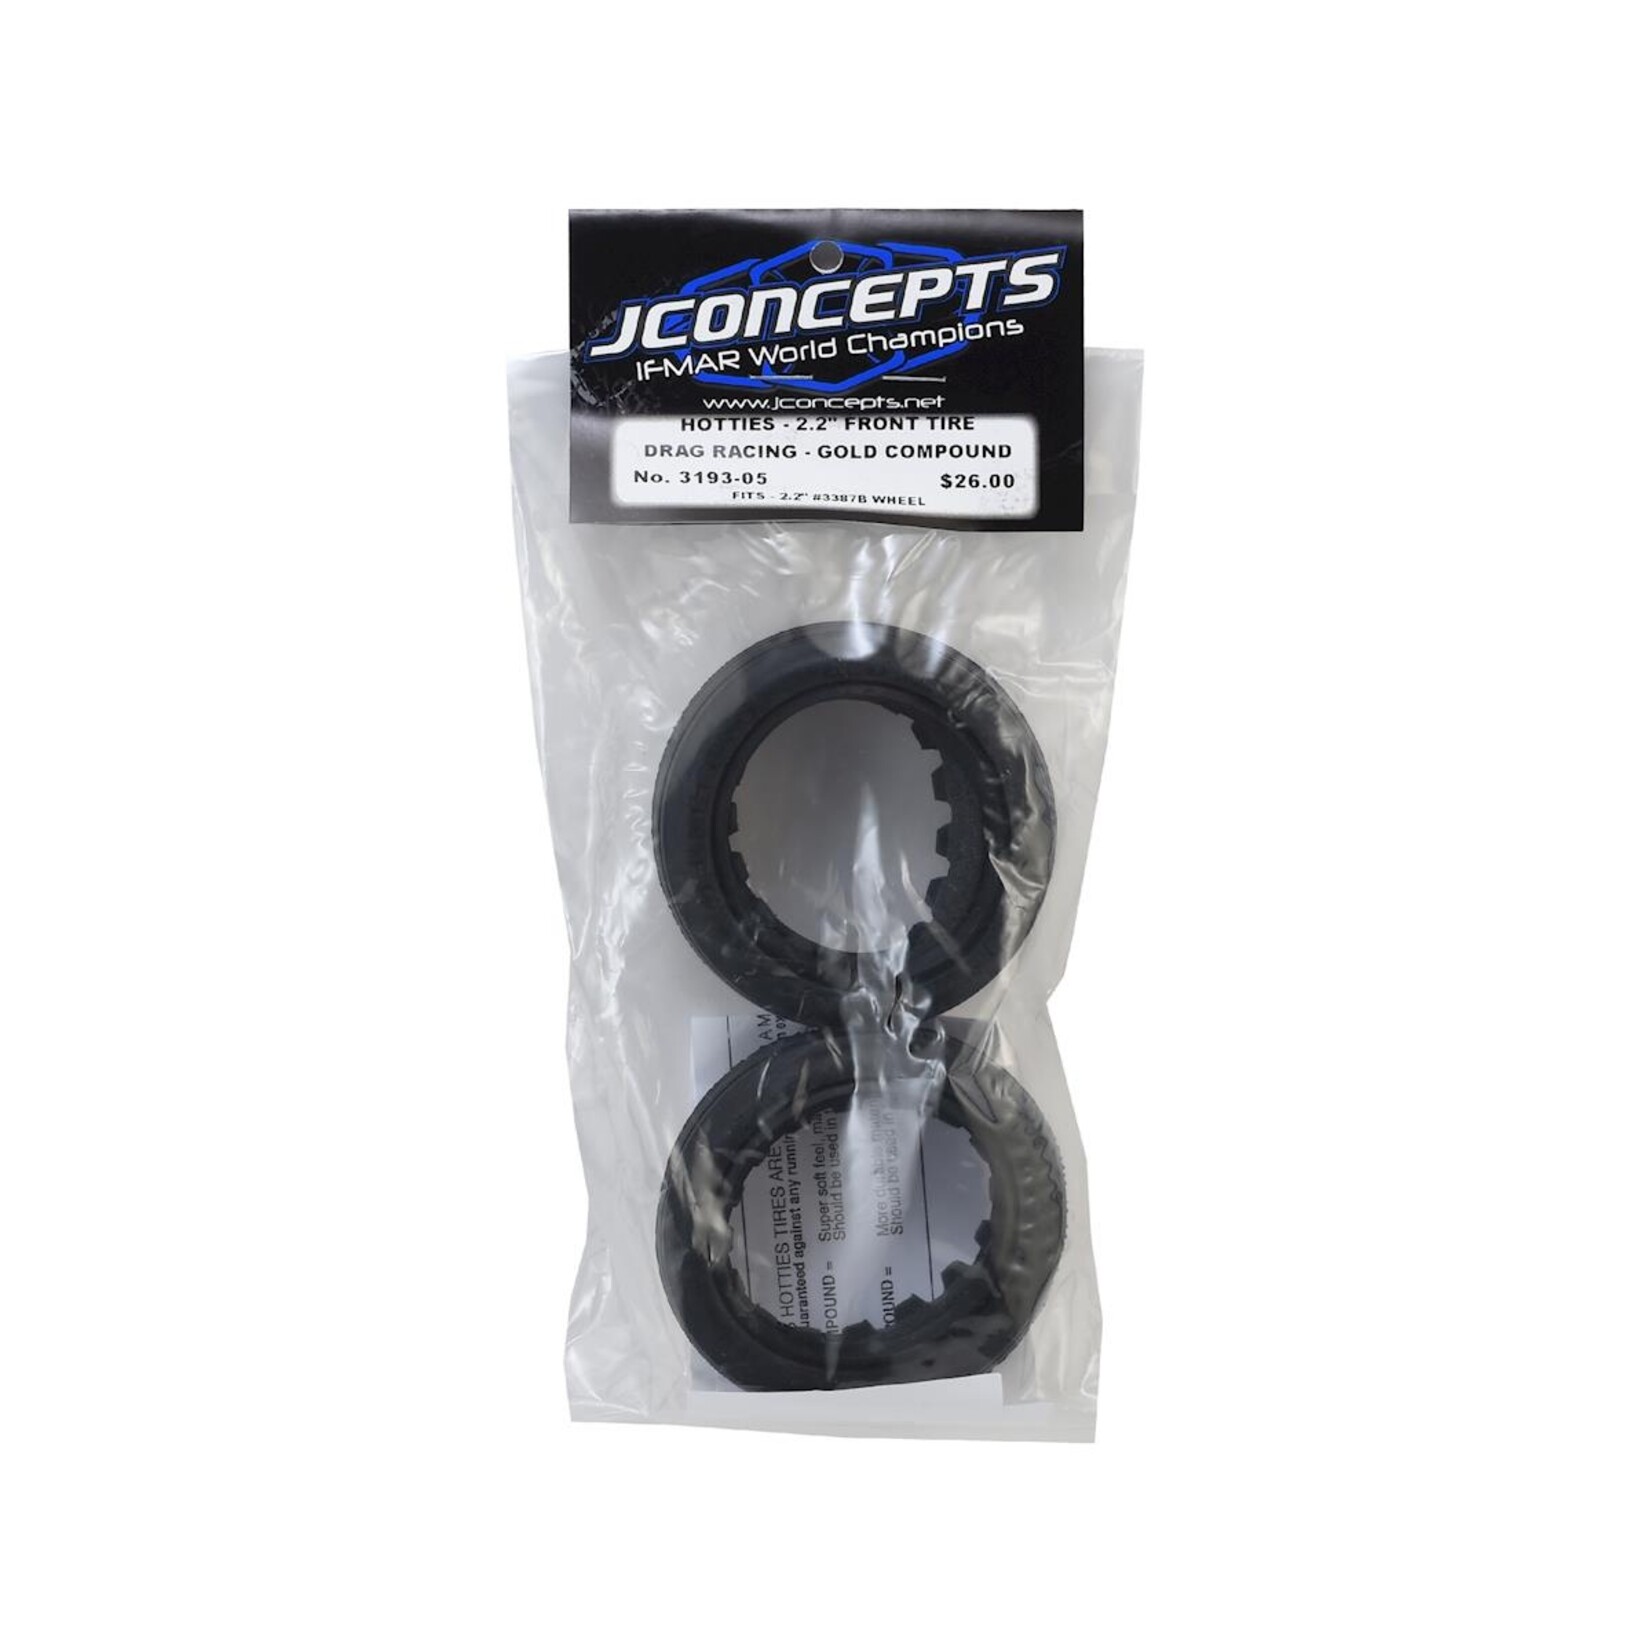 JConcepts JConcepts Hotties Street Eliminator 2.2" Drag Racing Front Tire (2) (Gold) #3193-05